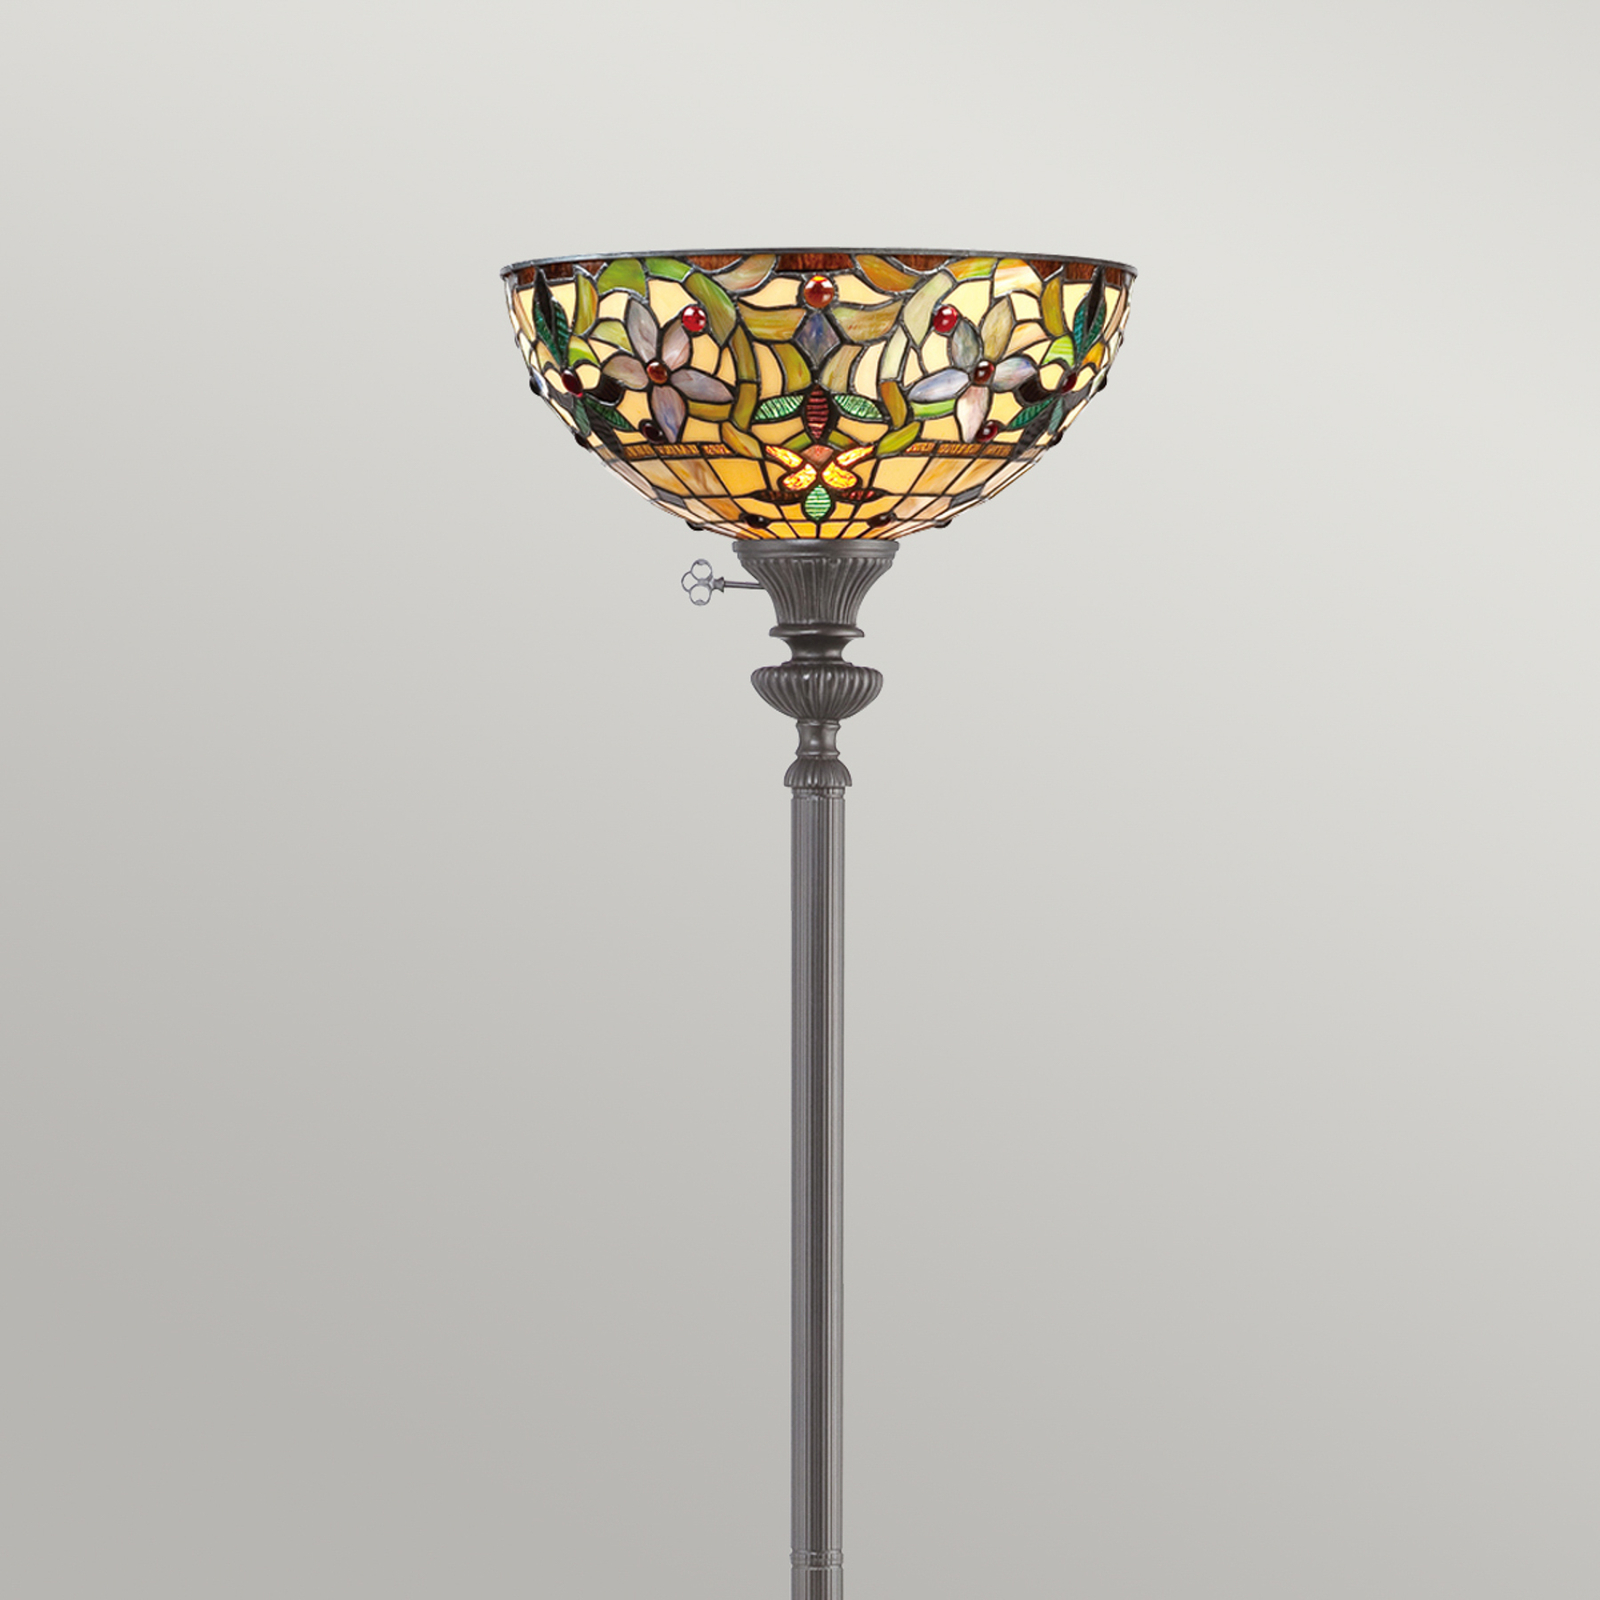 Kami uplighter, lampshade in a Tiffany design